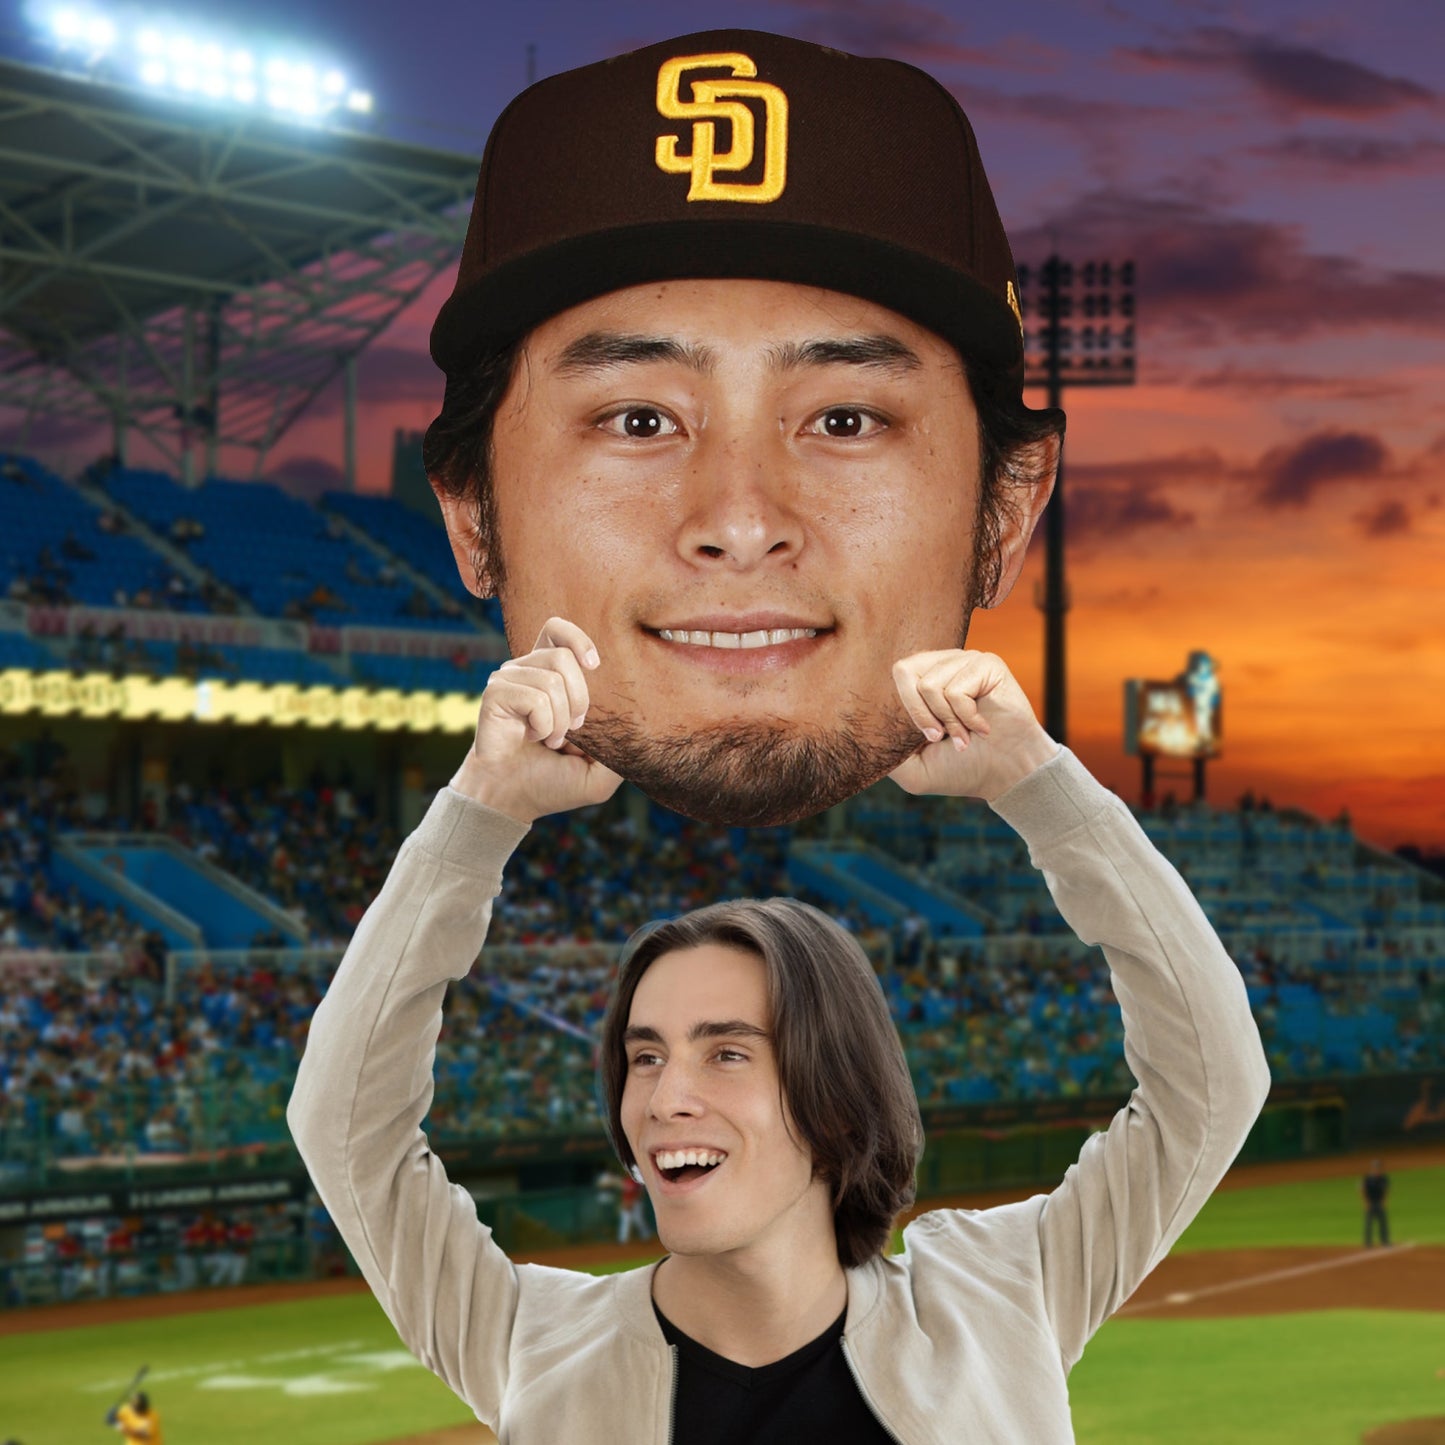 San Diego Padres: Yu Darvish Foam Core Cutout - Officially Licensed MLB Big Head